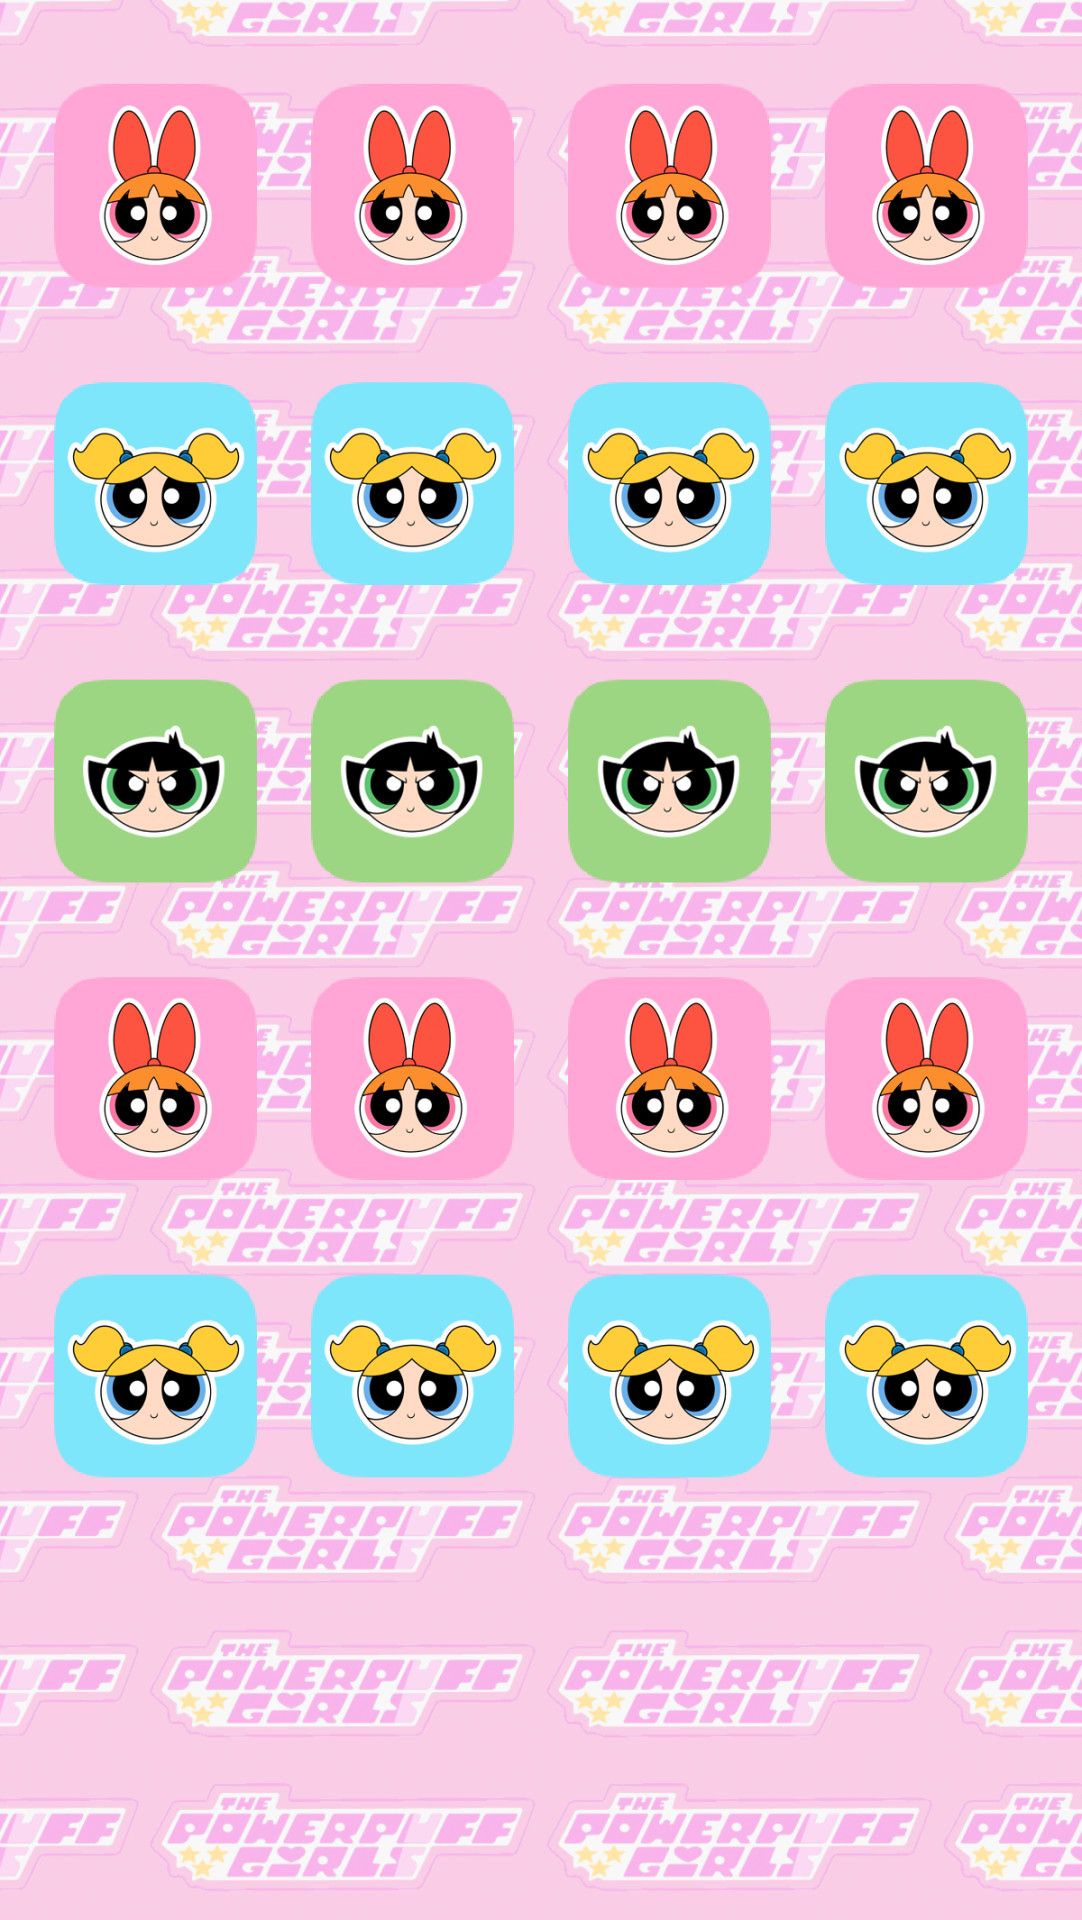 Powerpuff Girls iPhone Wallpaper